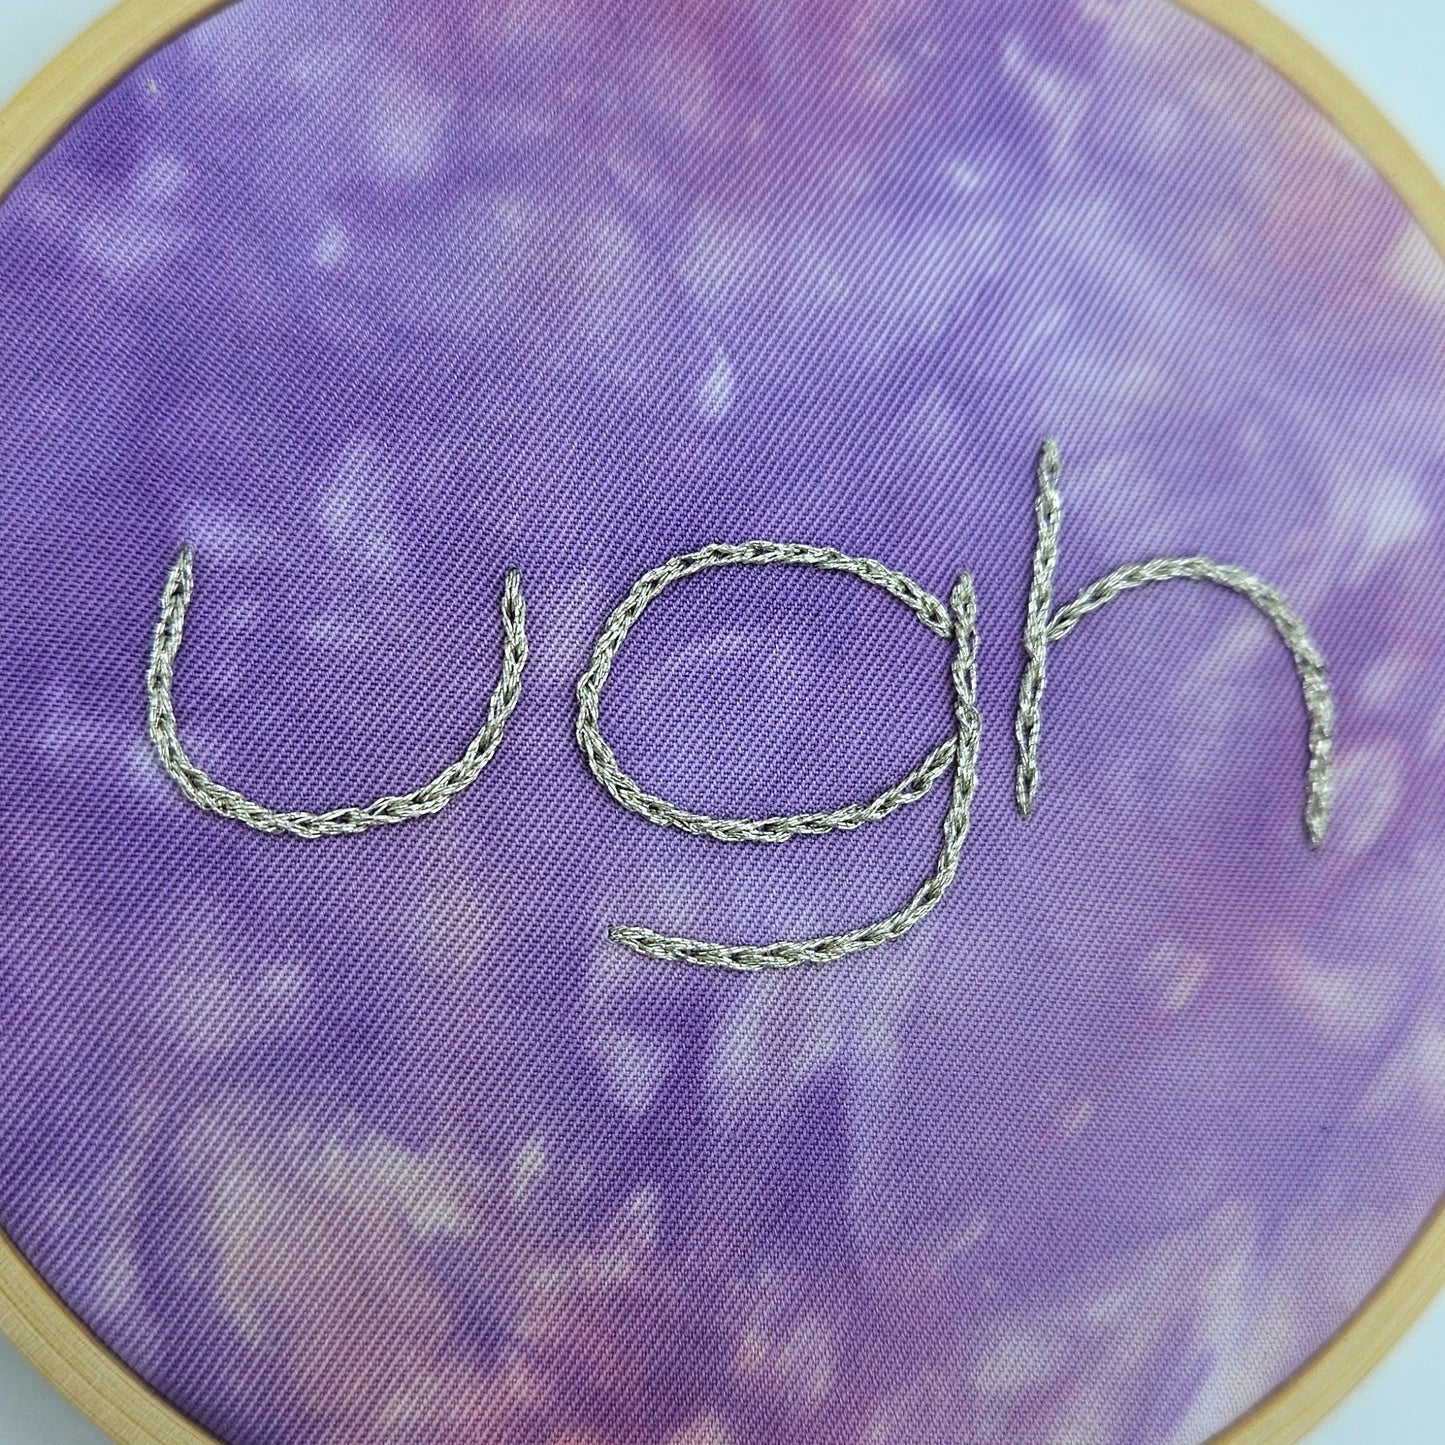 Metallic Silver & Purple Tie-Dye Ugh Embroidery Hoop Art